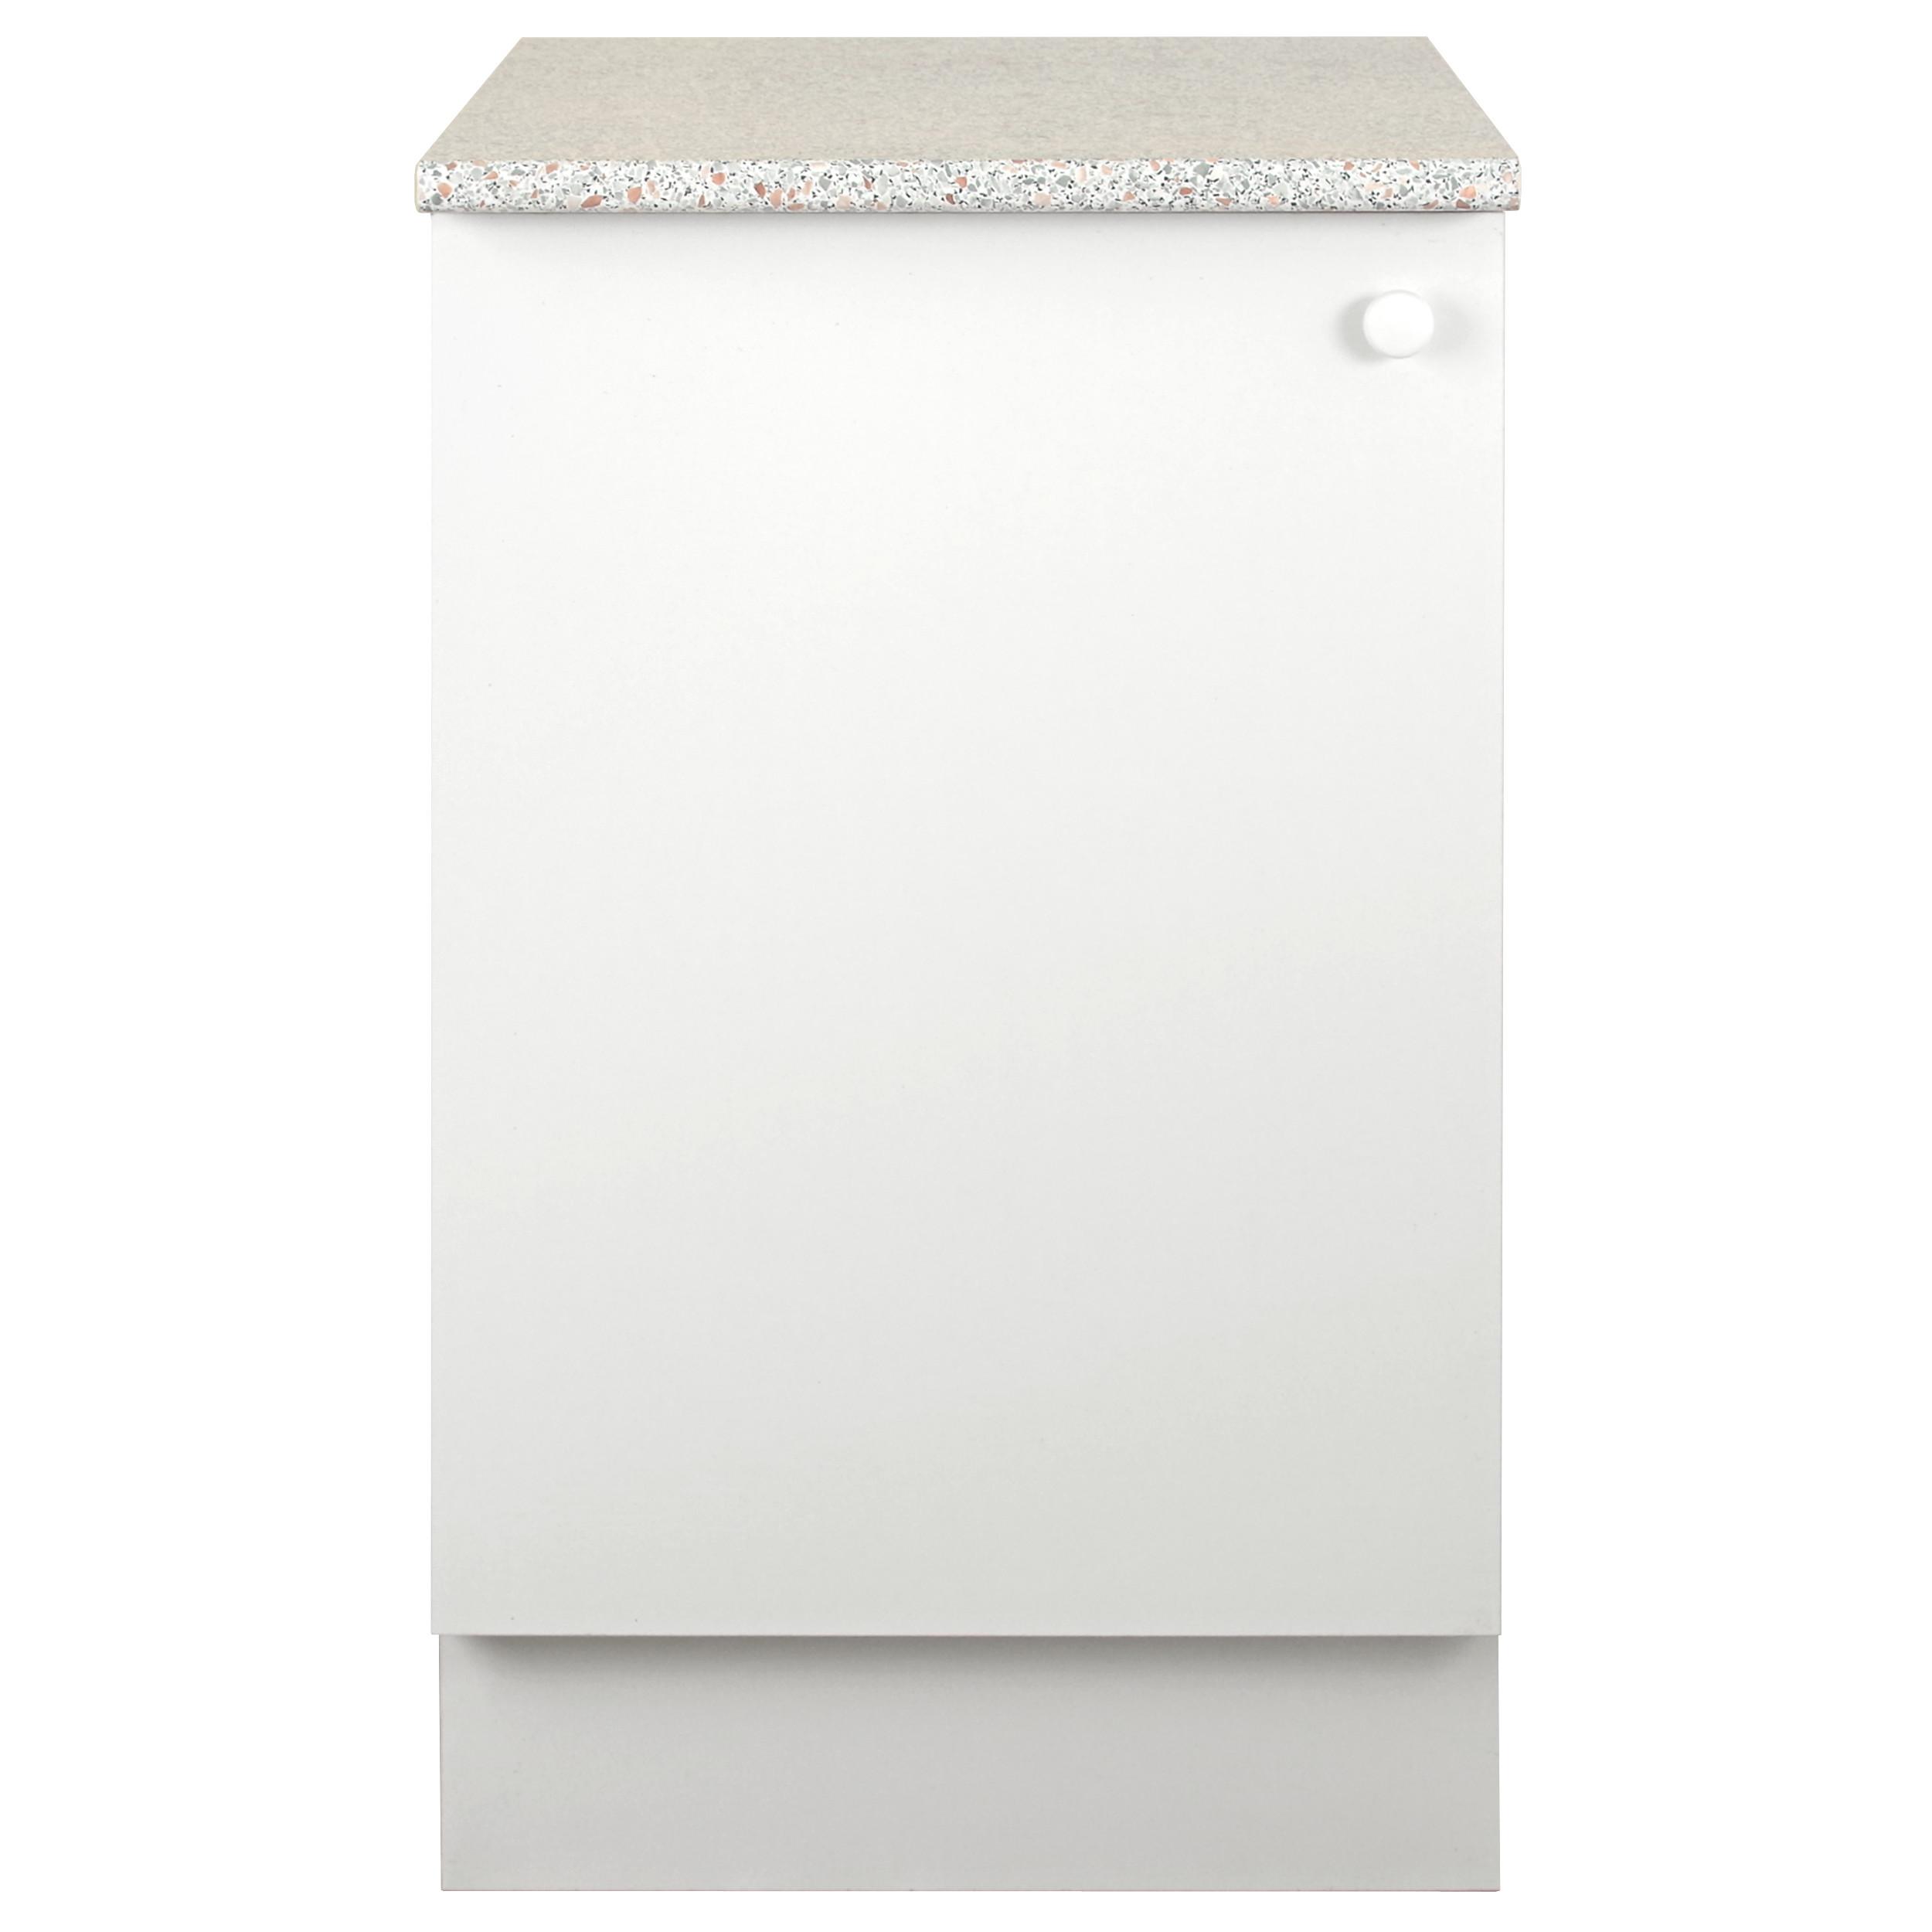 Шкаф напольный бэлла 40x86x60 см лдсп цвет белый